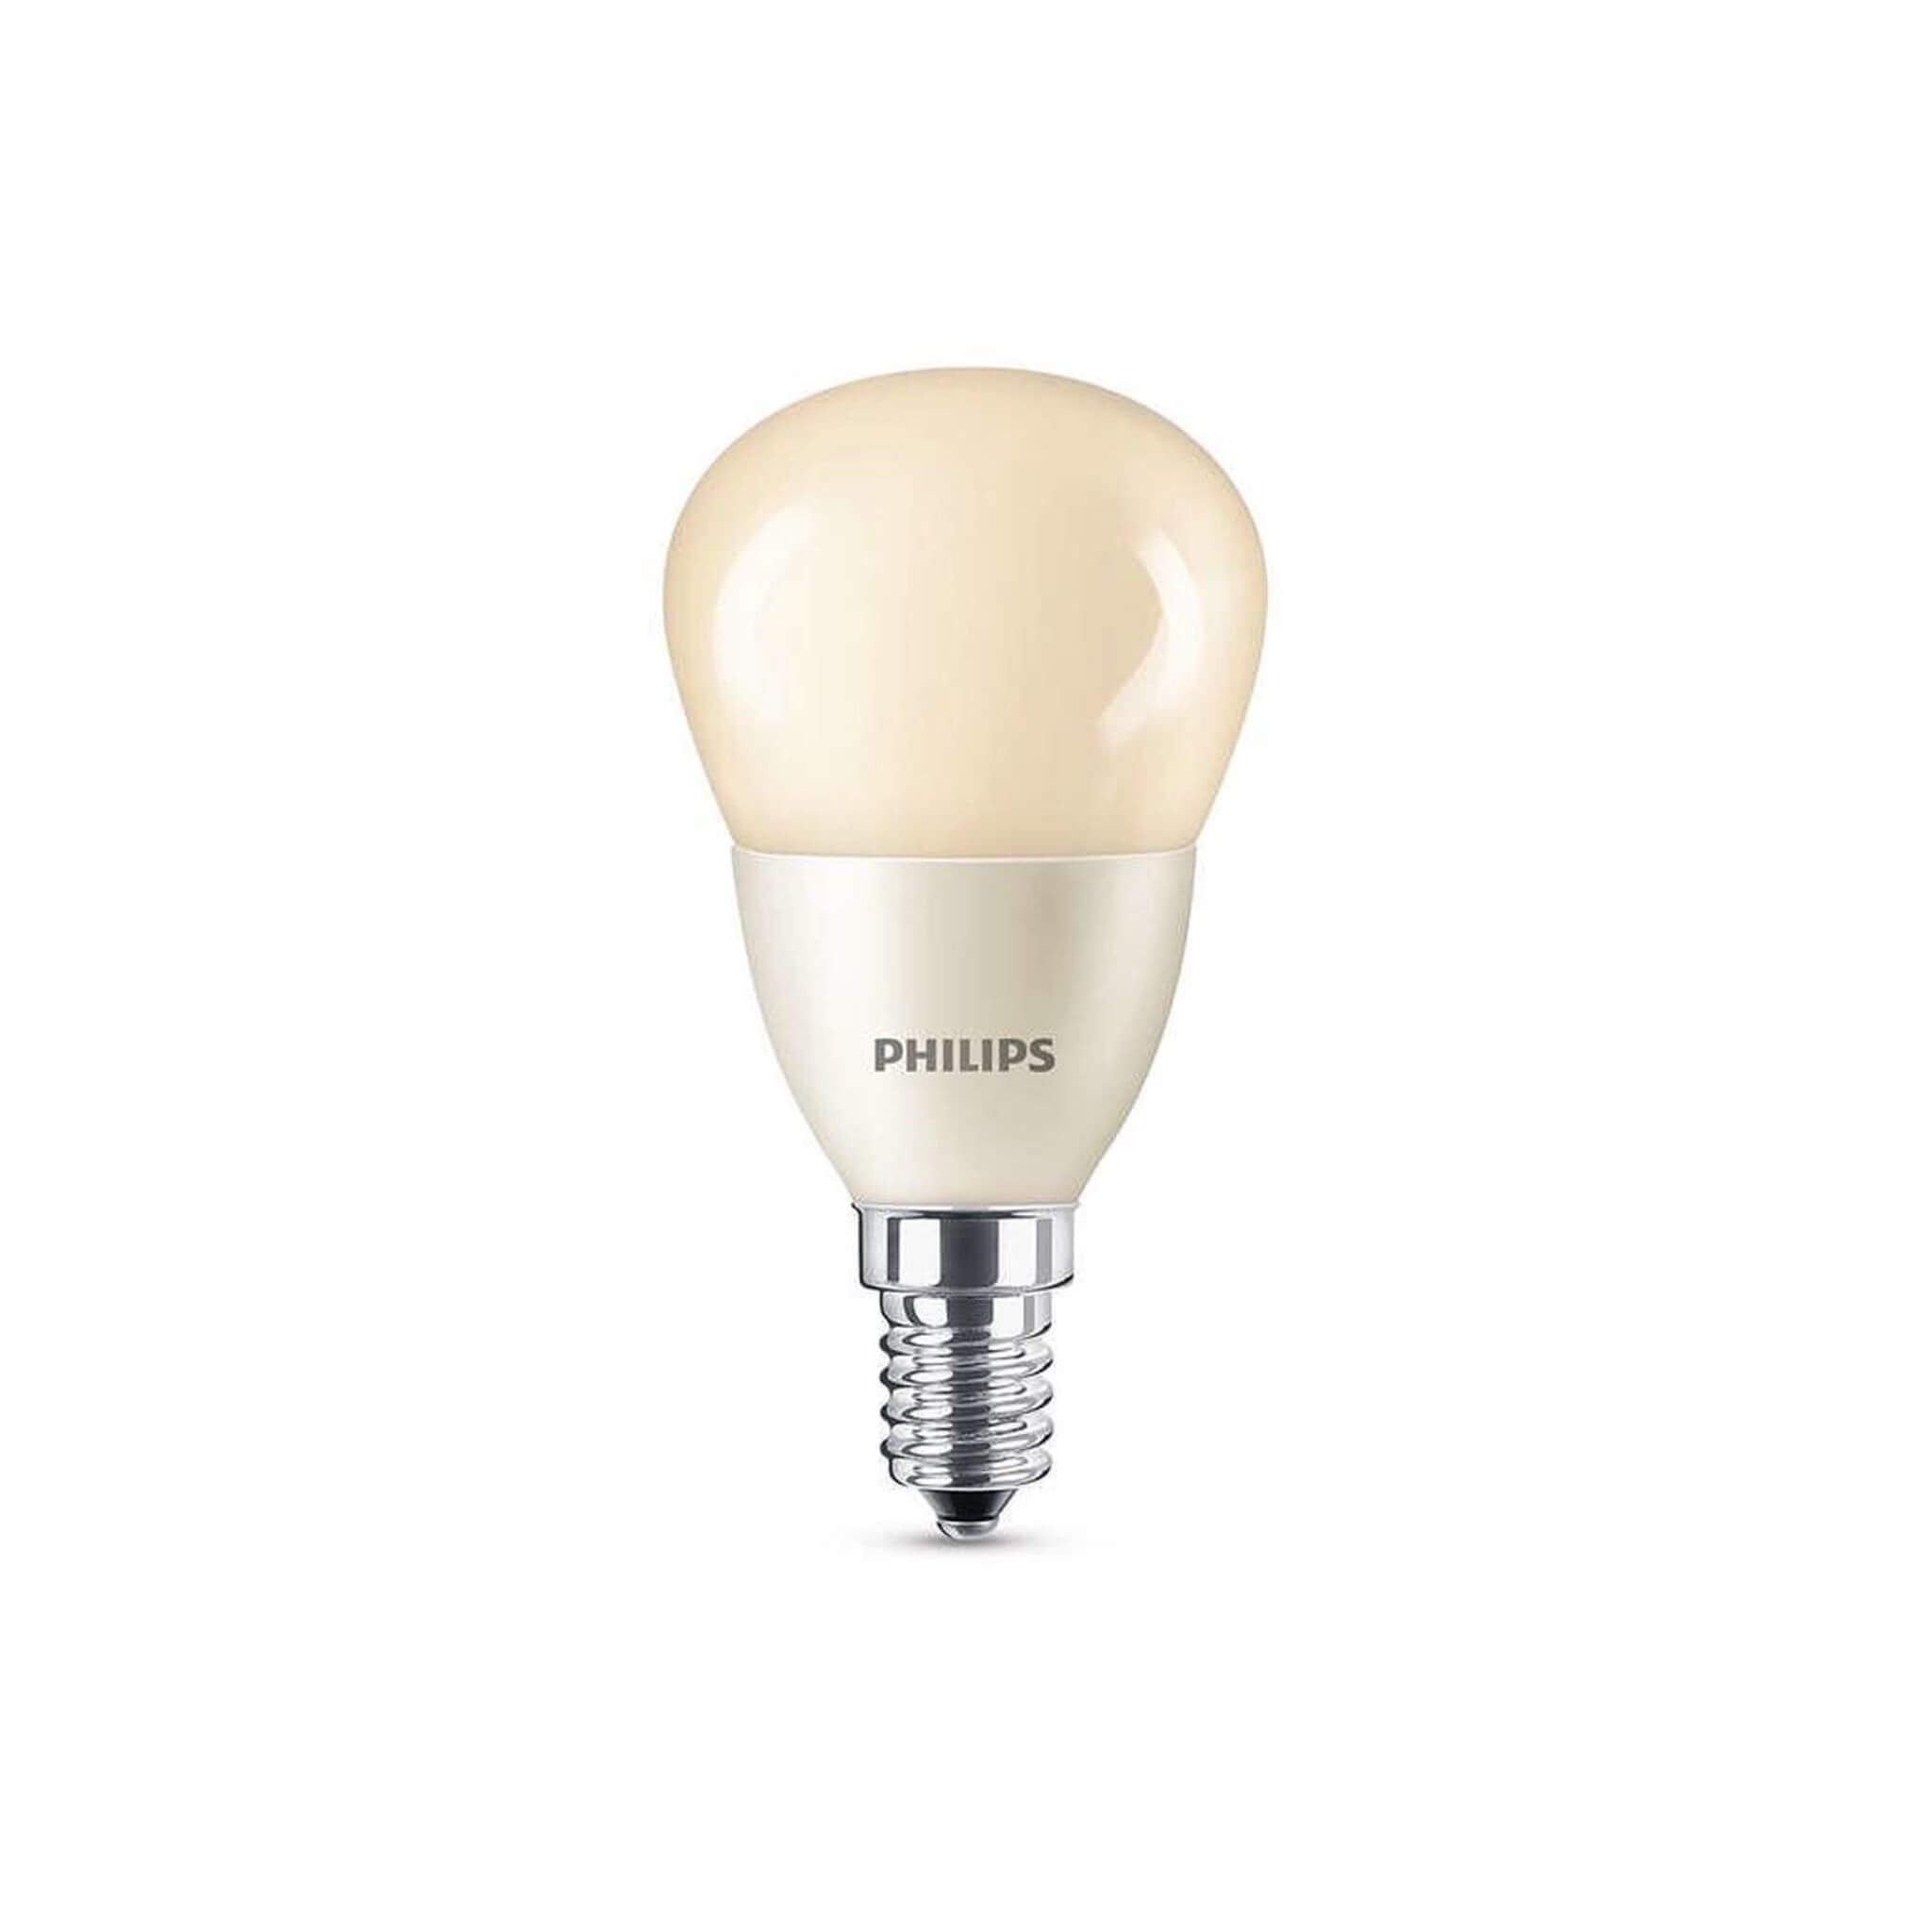 Philips LED Lamp Flame E14 fitting - Dimbaar warm wit licht - 4W (15 – LED.nl